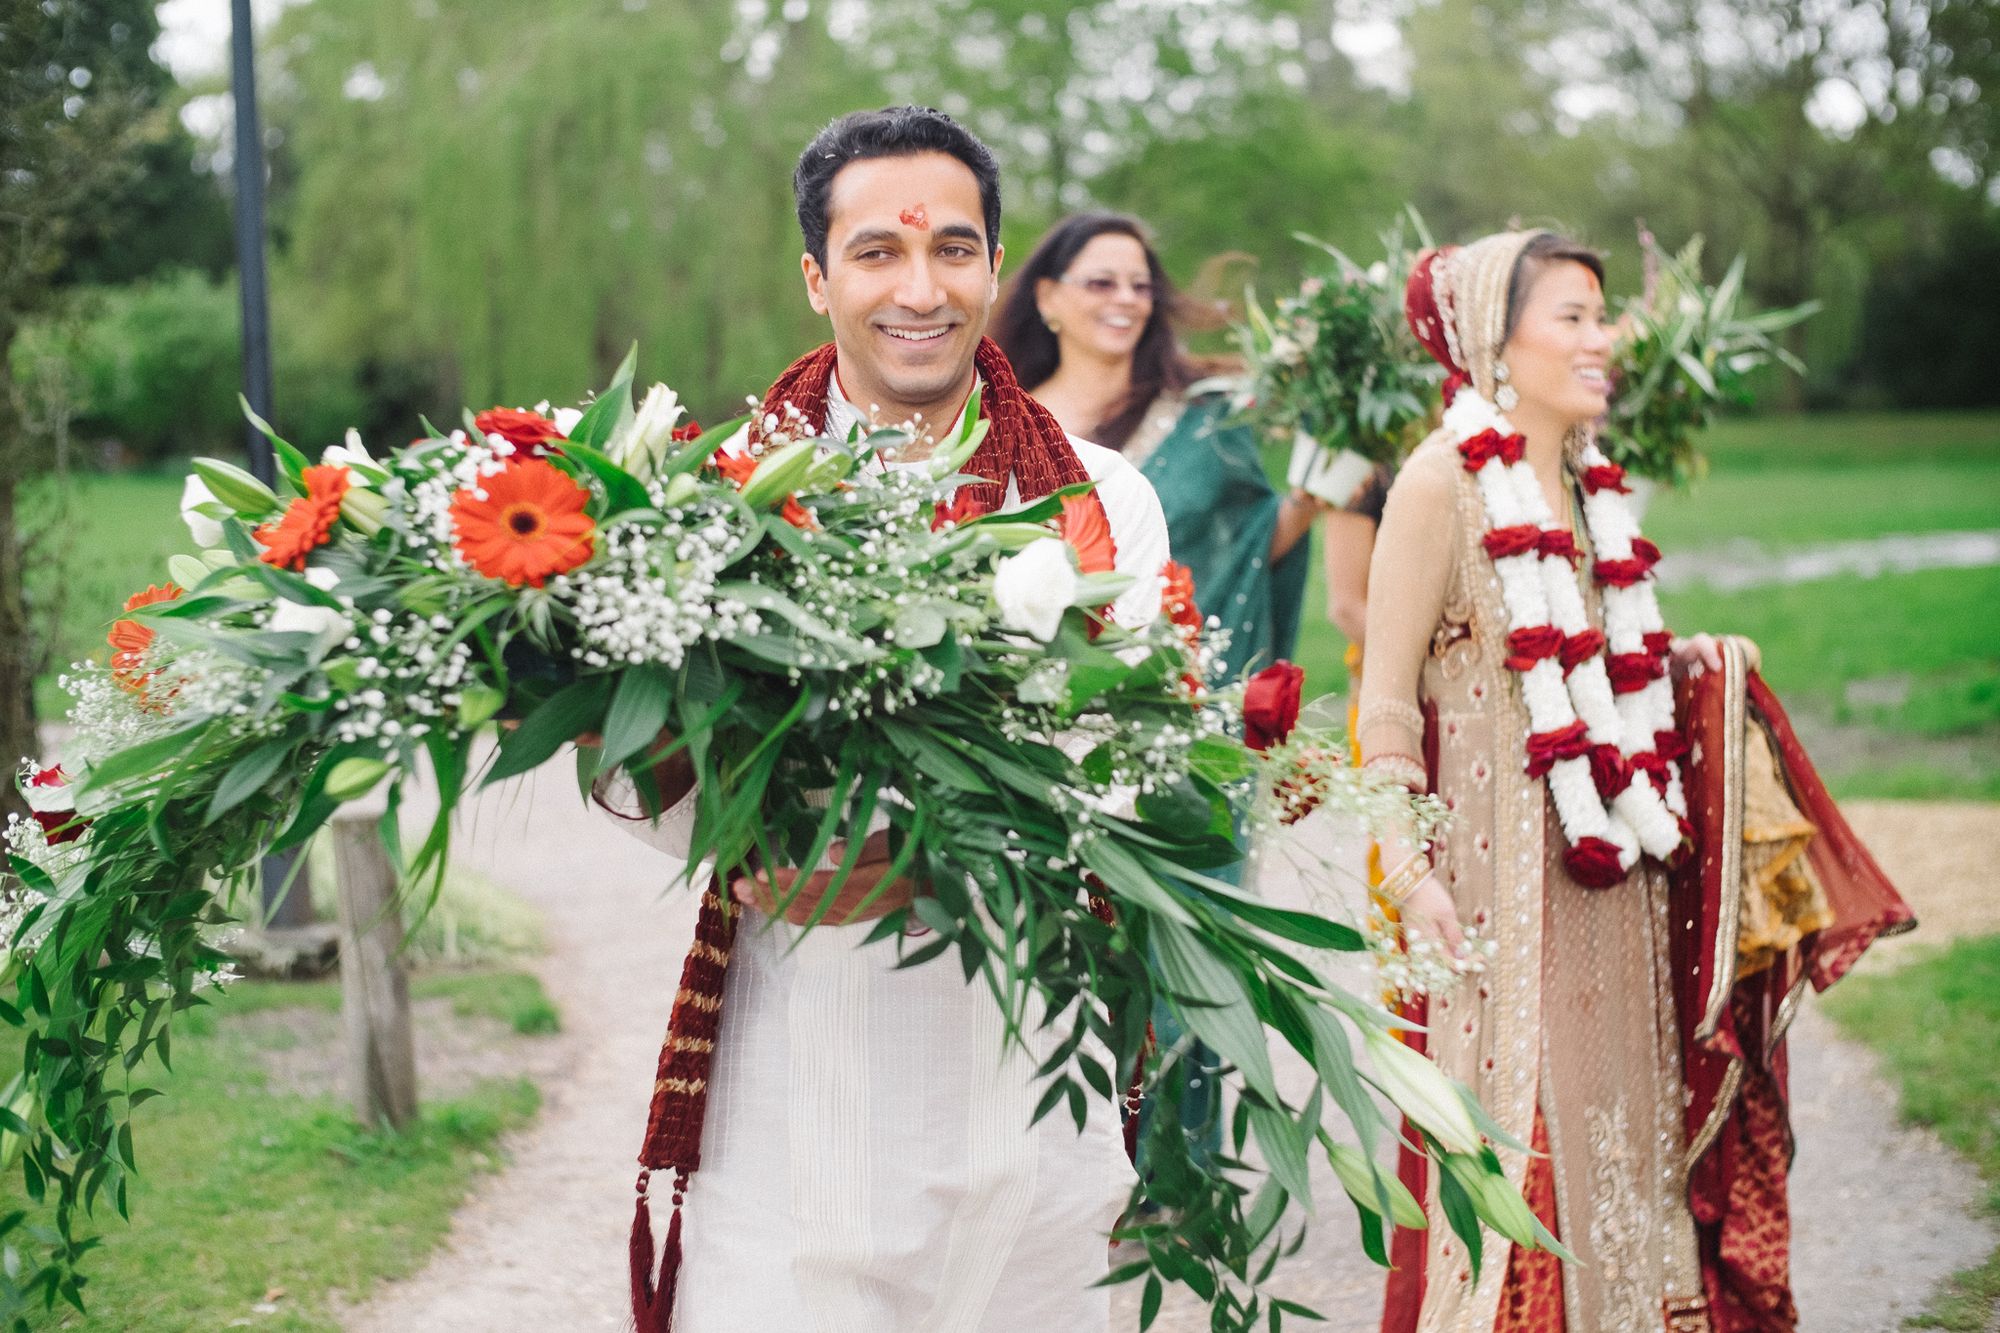 Joyful bride and groom with flowers after Hindu wedding ceremony